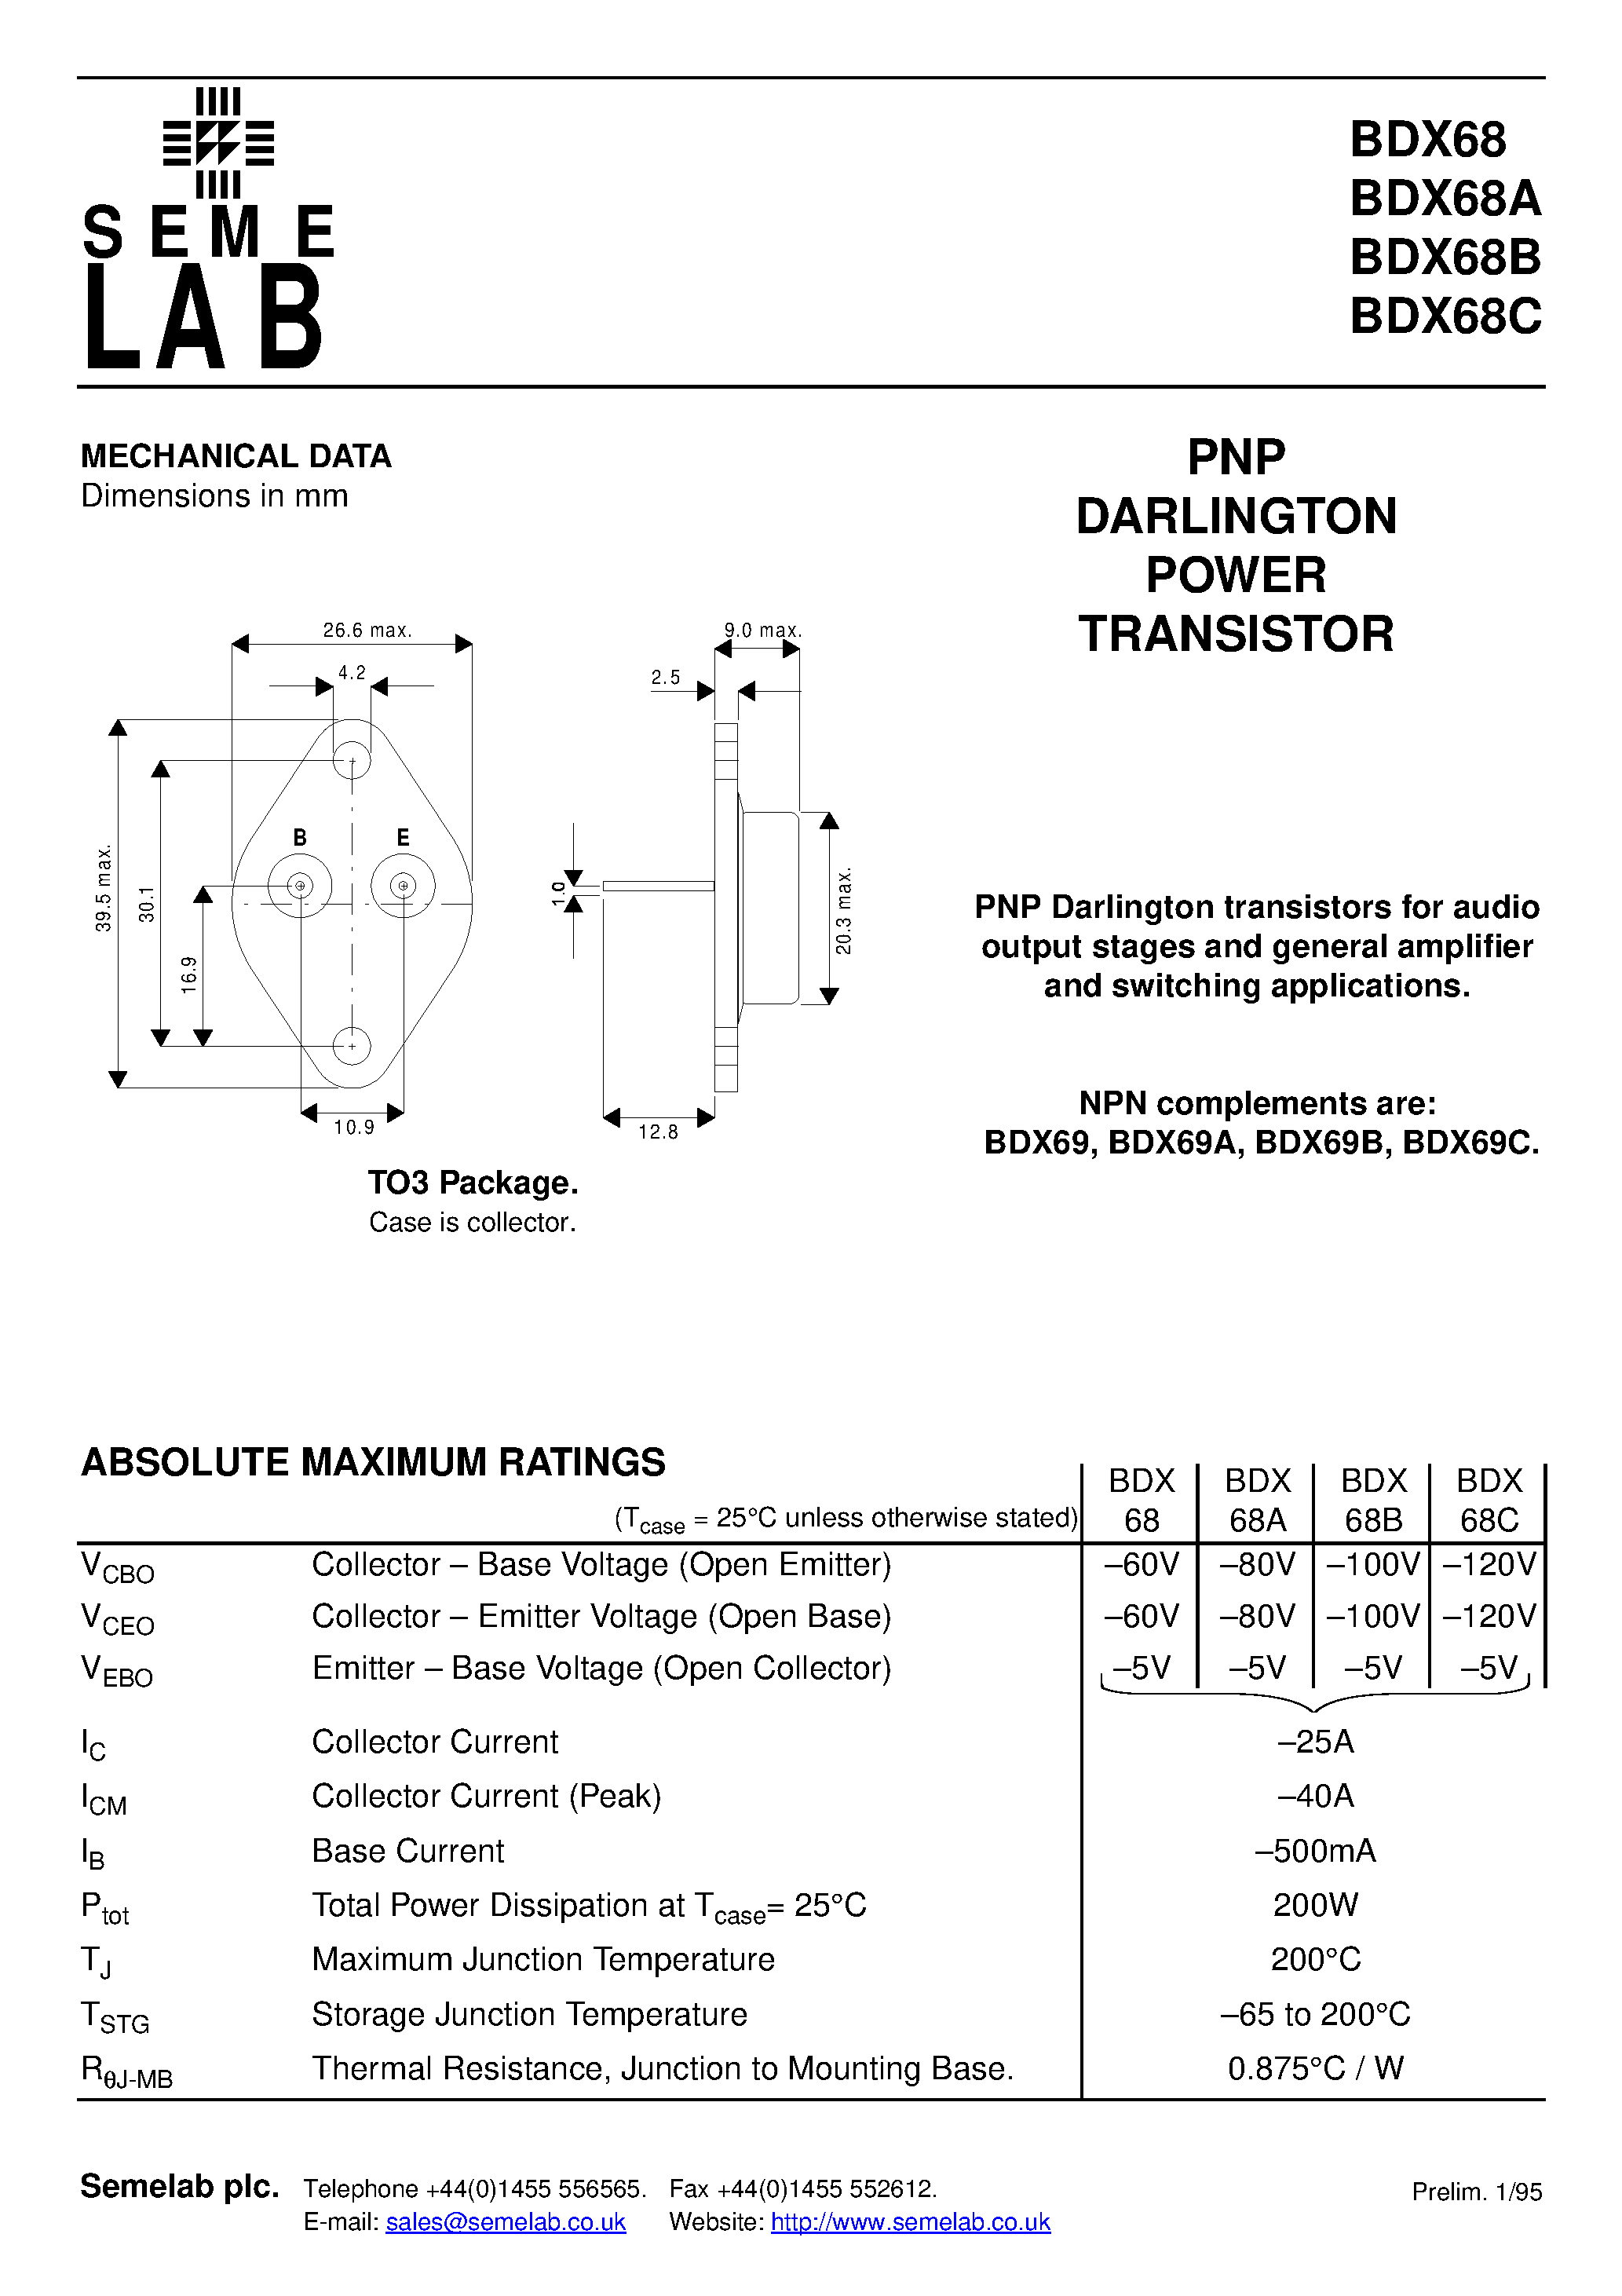 Datasheet BDX68B - PNP DARLINGTON POWER TRANSISTOR page 1